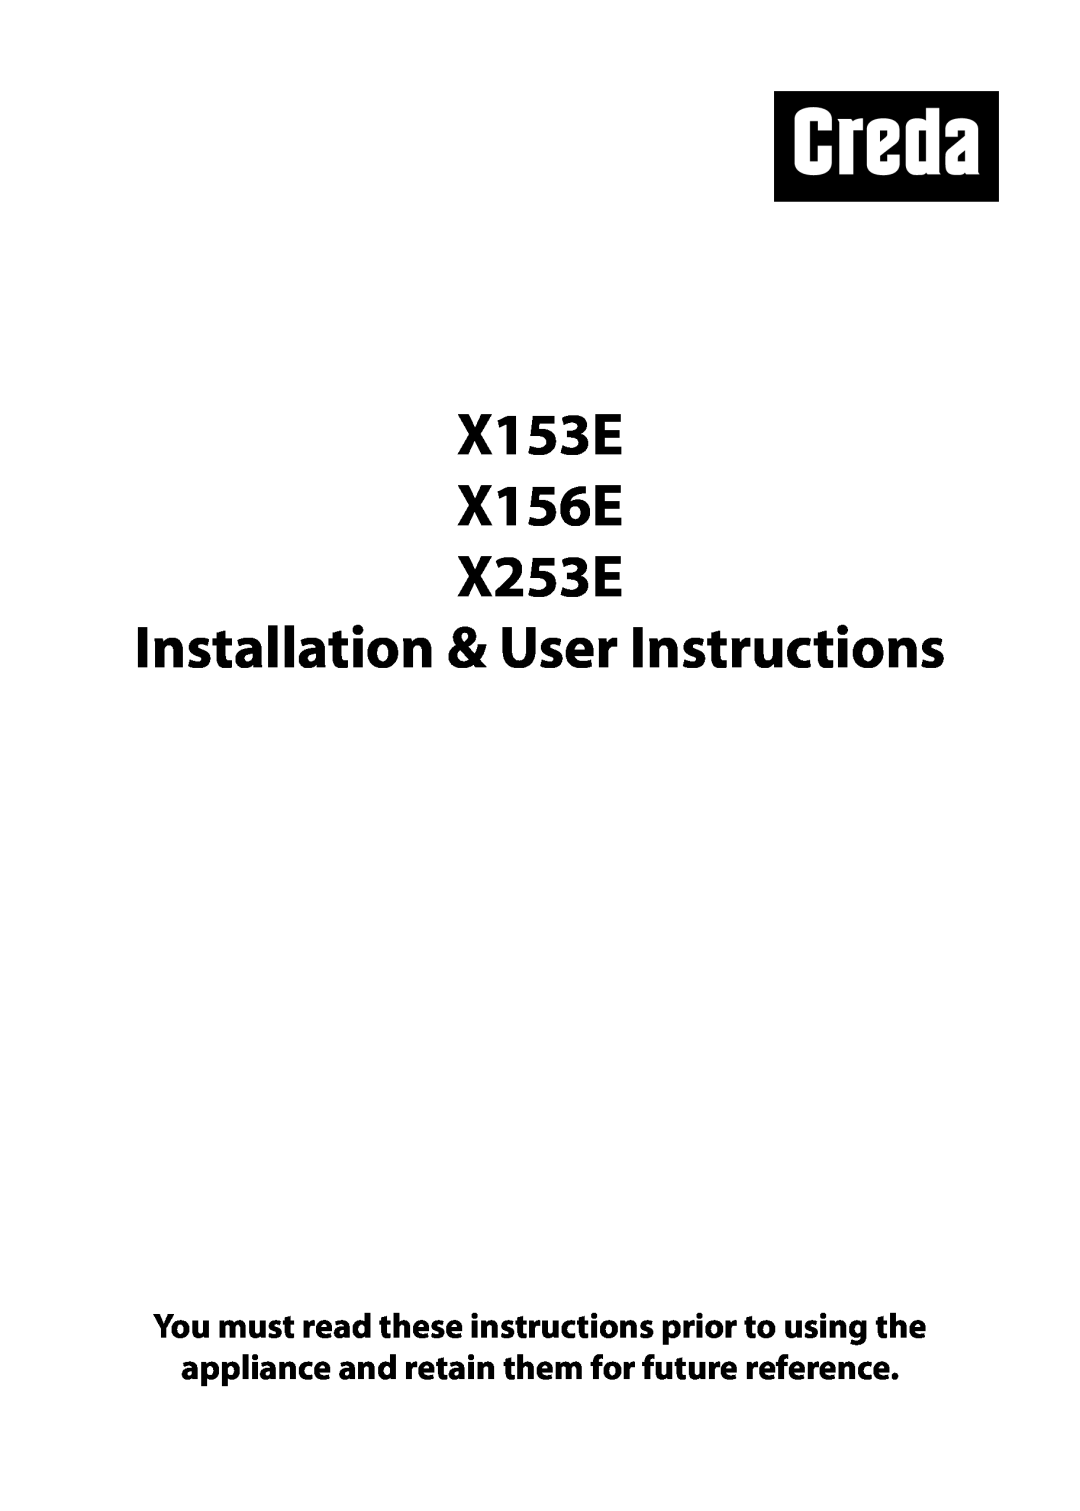 Creda manual X153E X156E X253E, Installation & User Instructions 